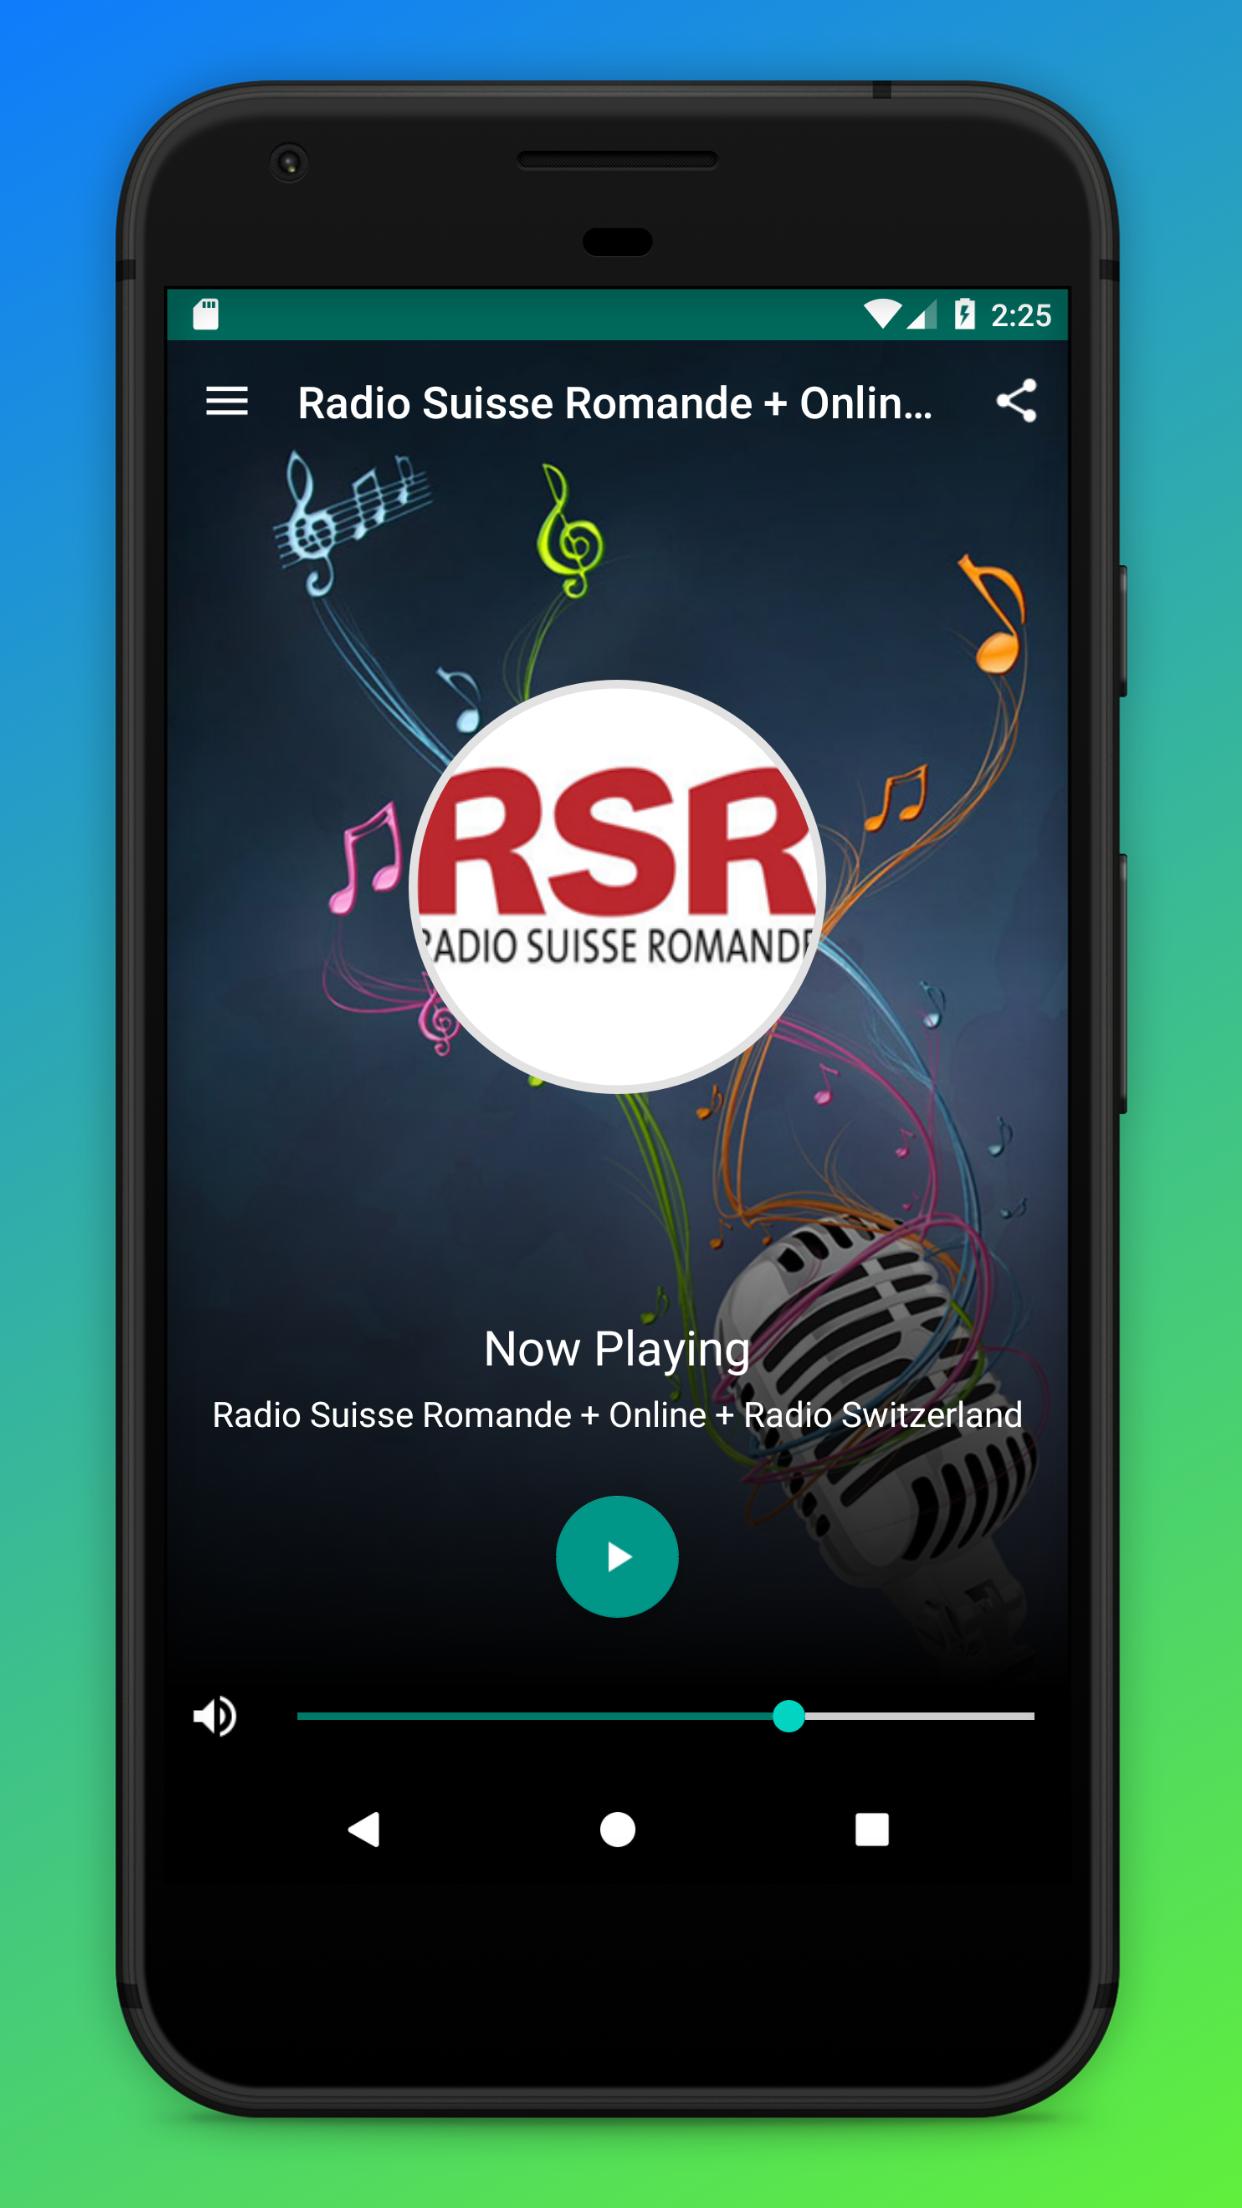 Radio Suisse Romande + Online + Radio Switzerland for Android - APK Download